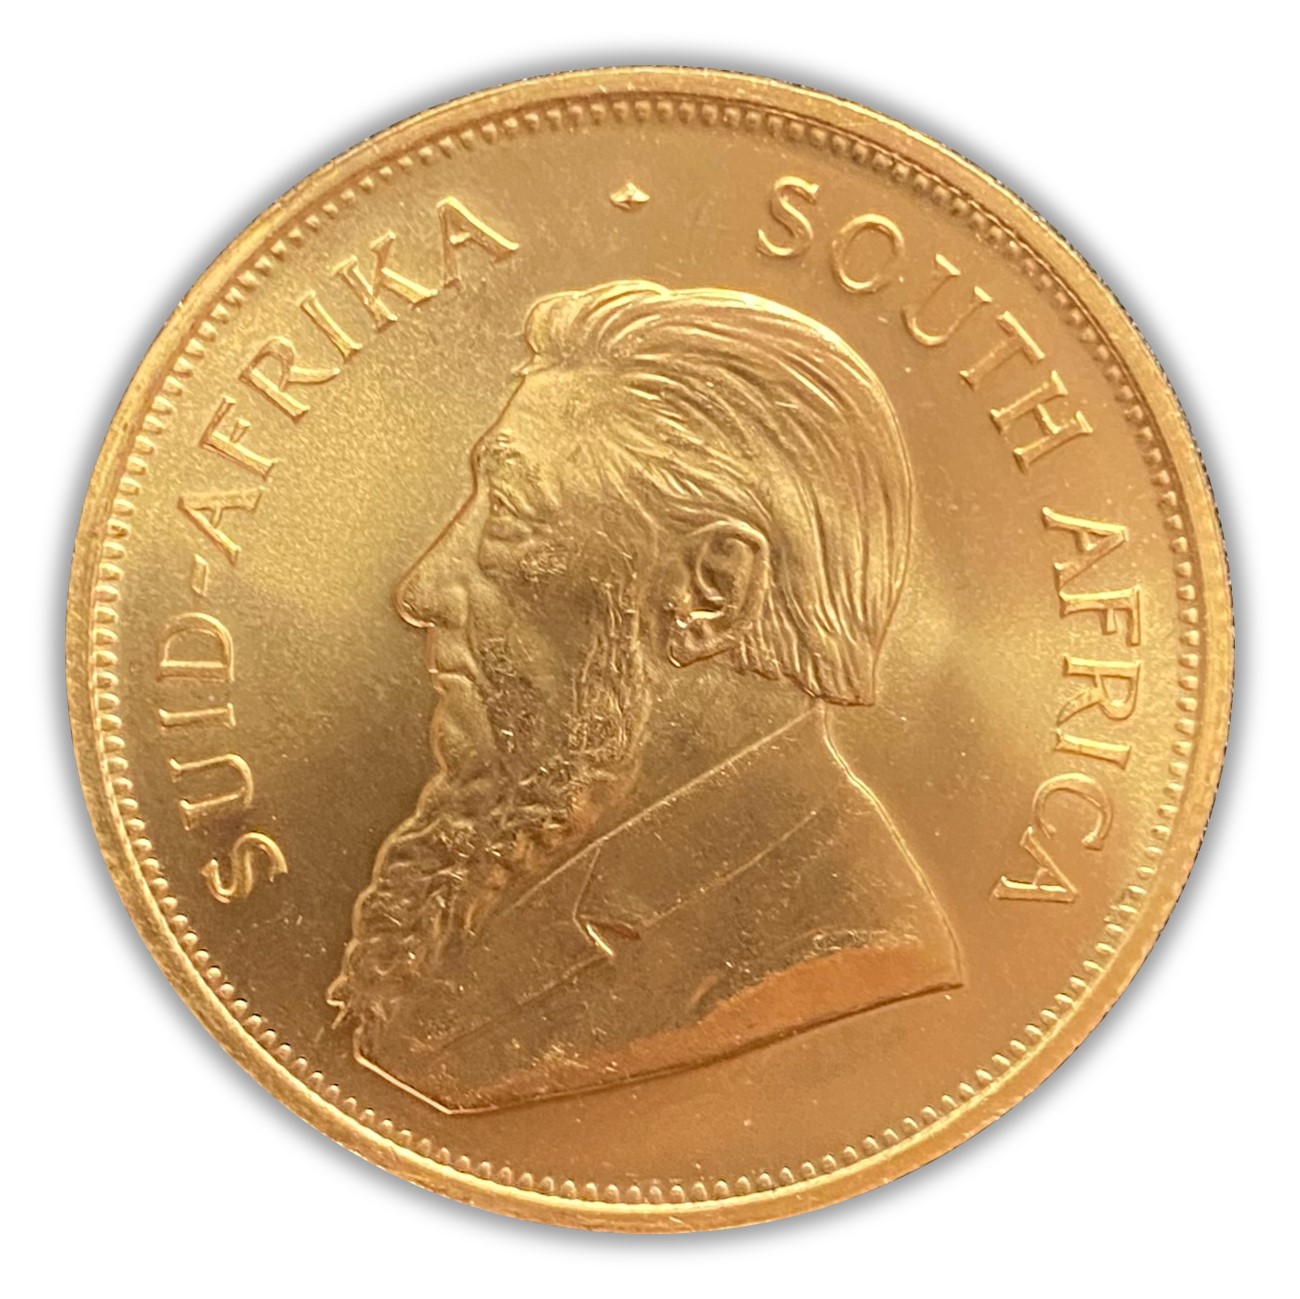 1984 South Africa Mint Krugerrand 1oz Gold Coin